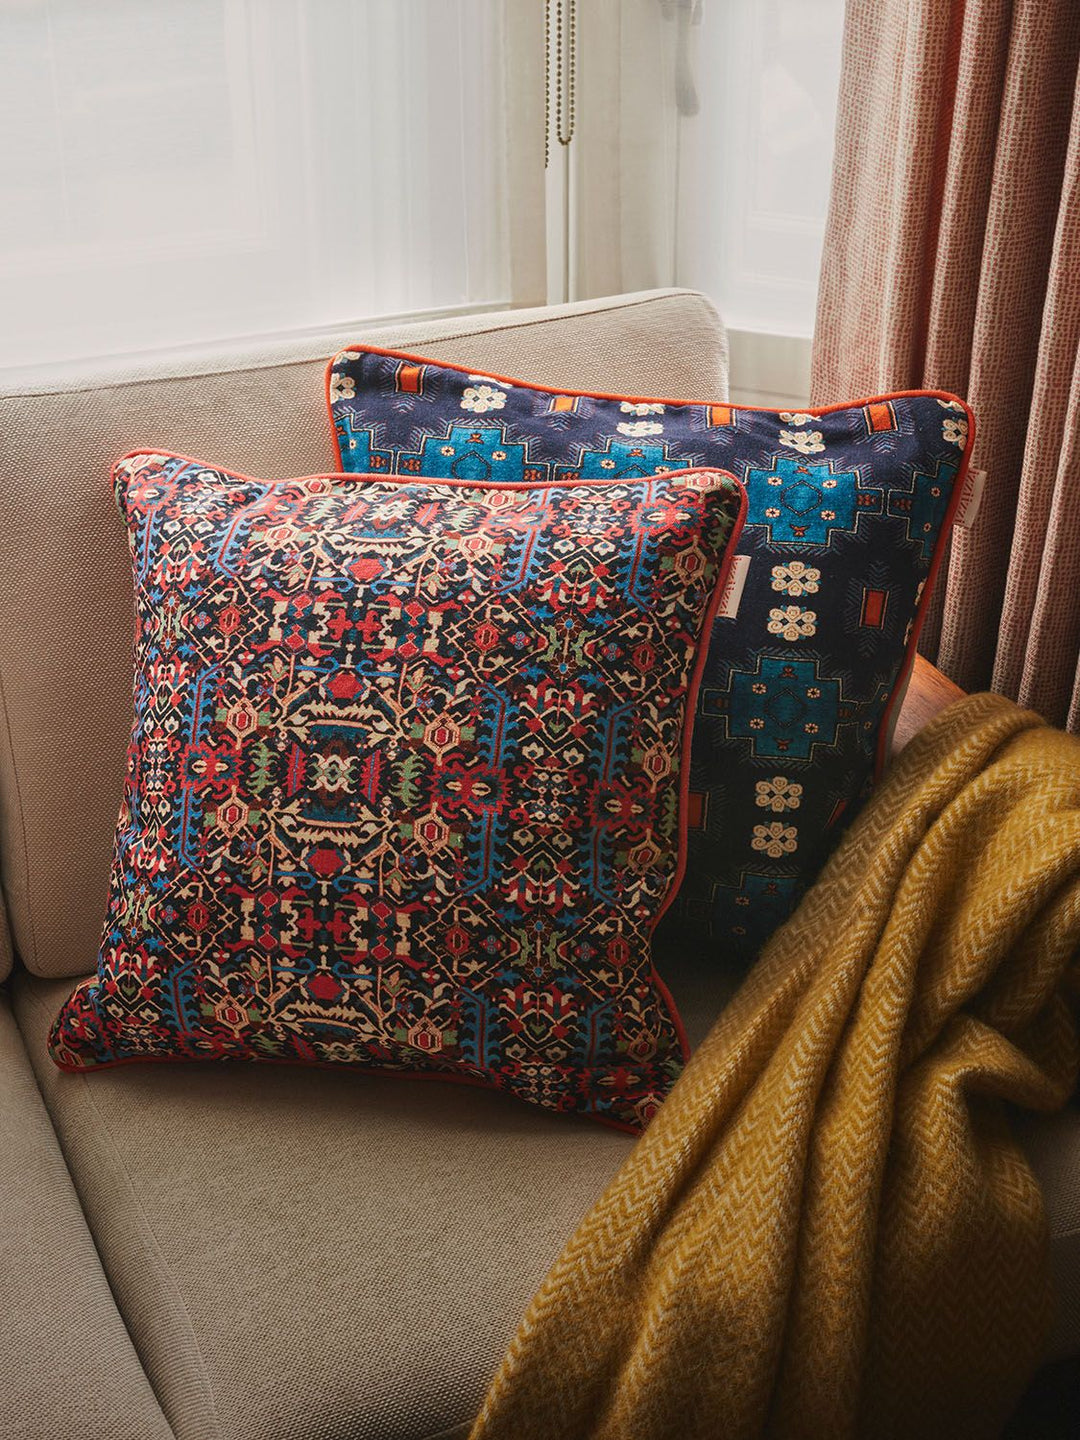 leila-izziizzi-cushion-aztec-design-multi-coloured-blue-red-british-designer-uk-made